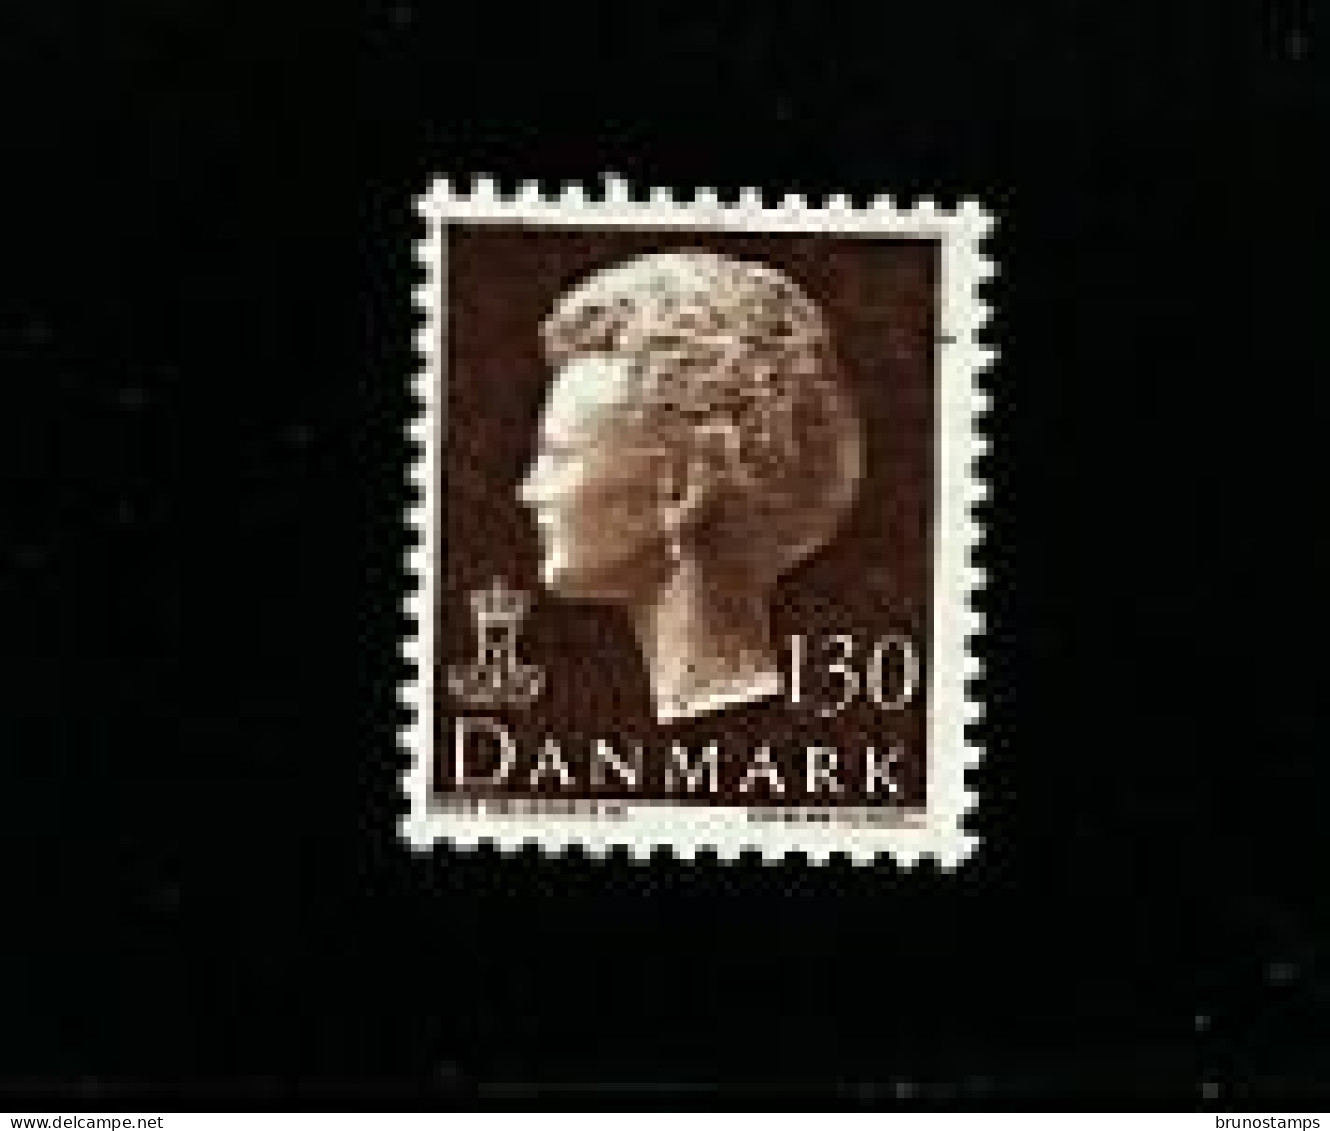 DENMARK/DANMARK - 1981  DEFINITIVE  1.30 Kr.  BROWN  MINT NH - Neufs